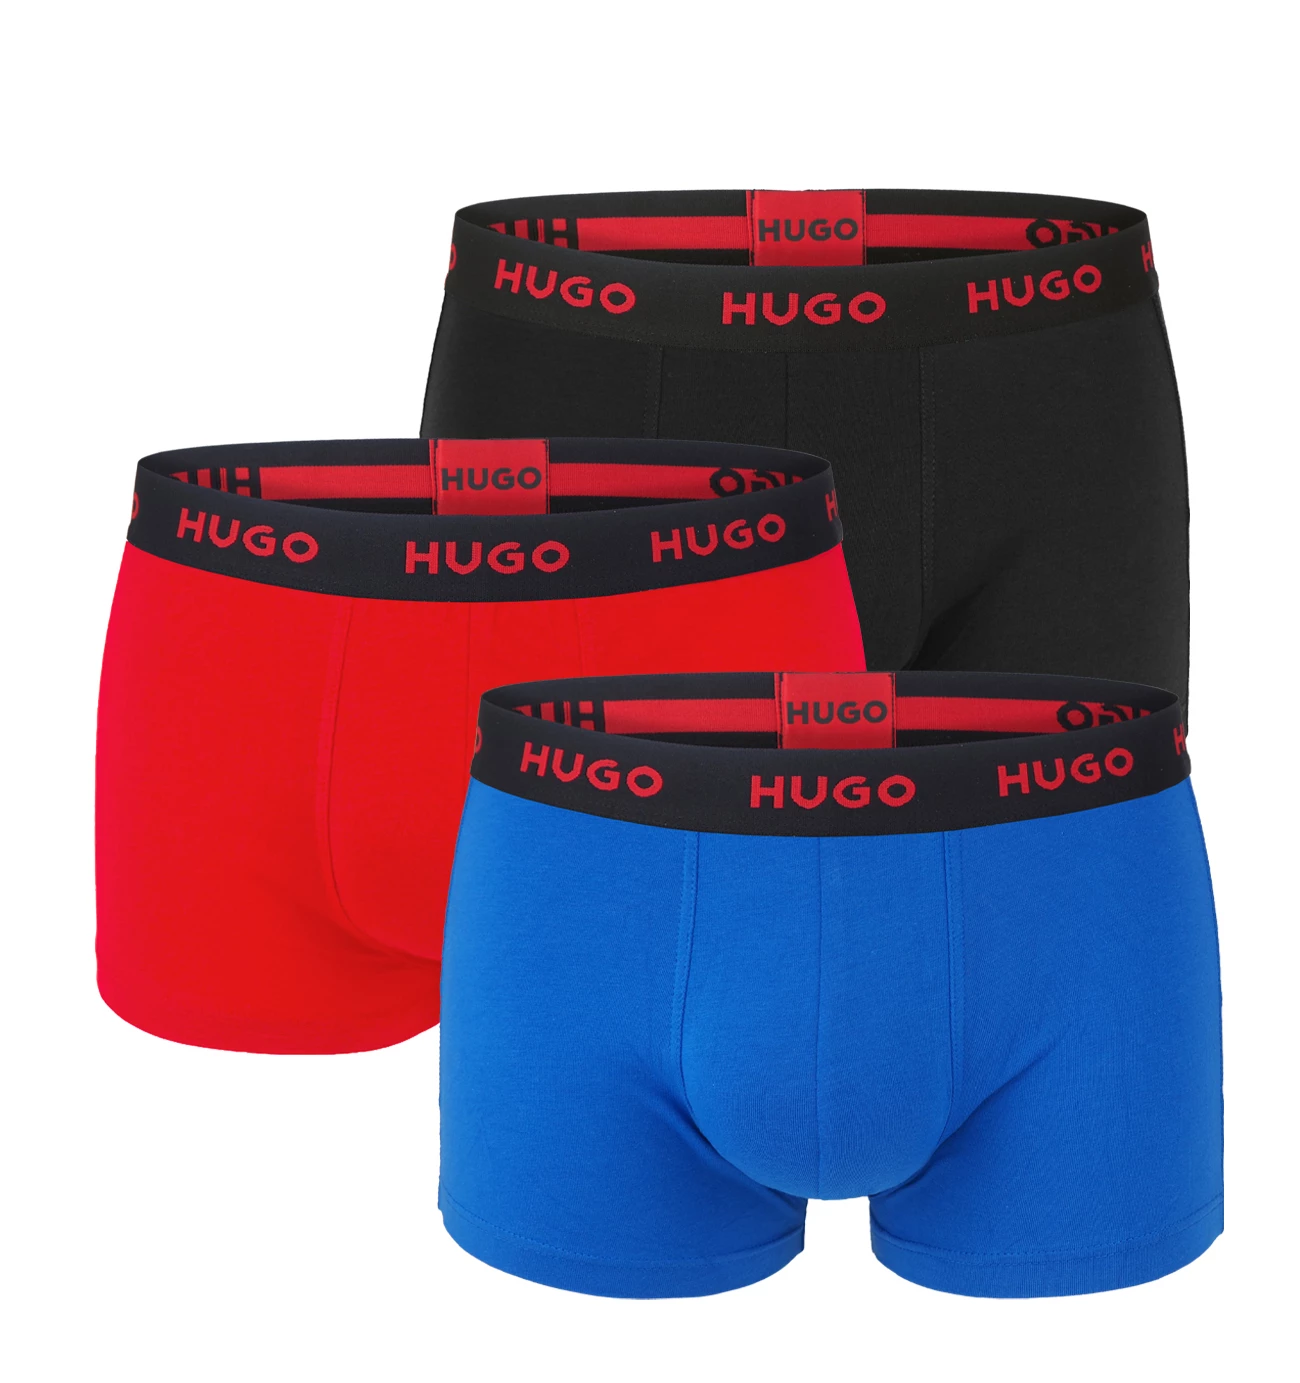 HUGO - boxerky 3PACK cotton stretch dark color & red combo - limitovaná fashion edícia (HUGO BOSS)